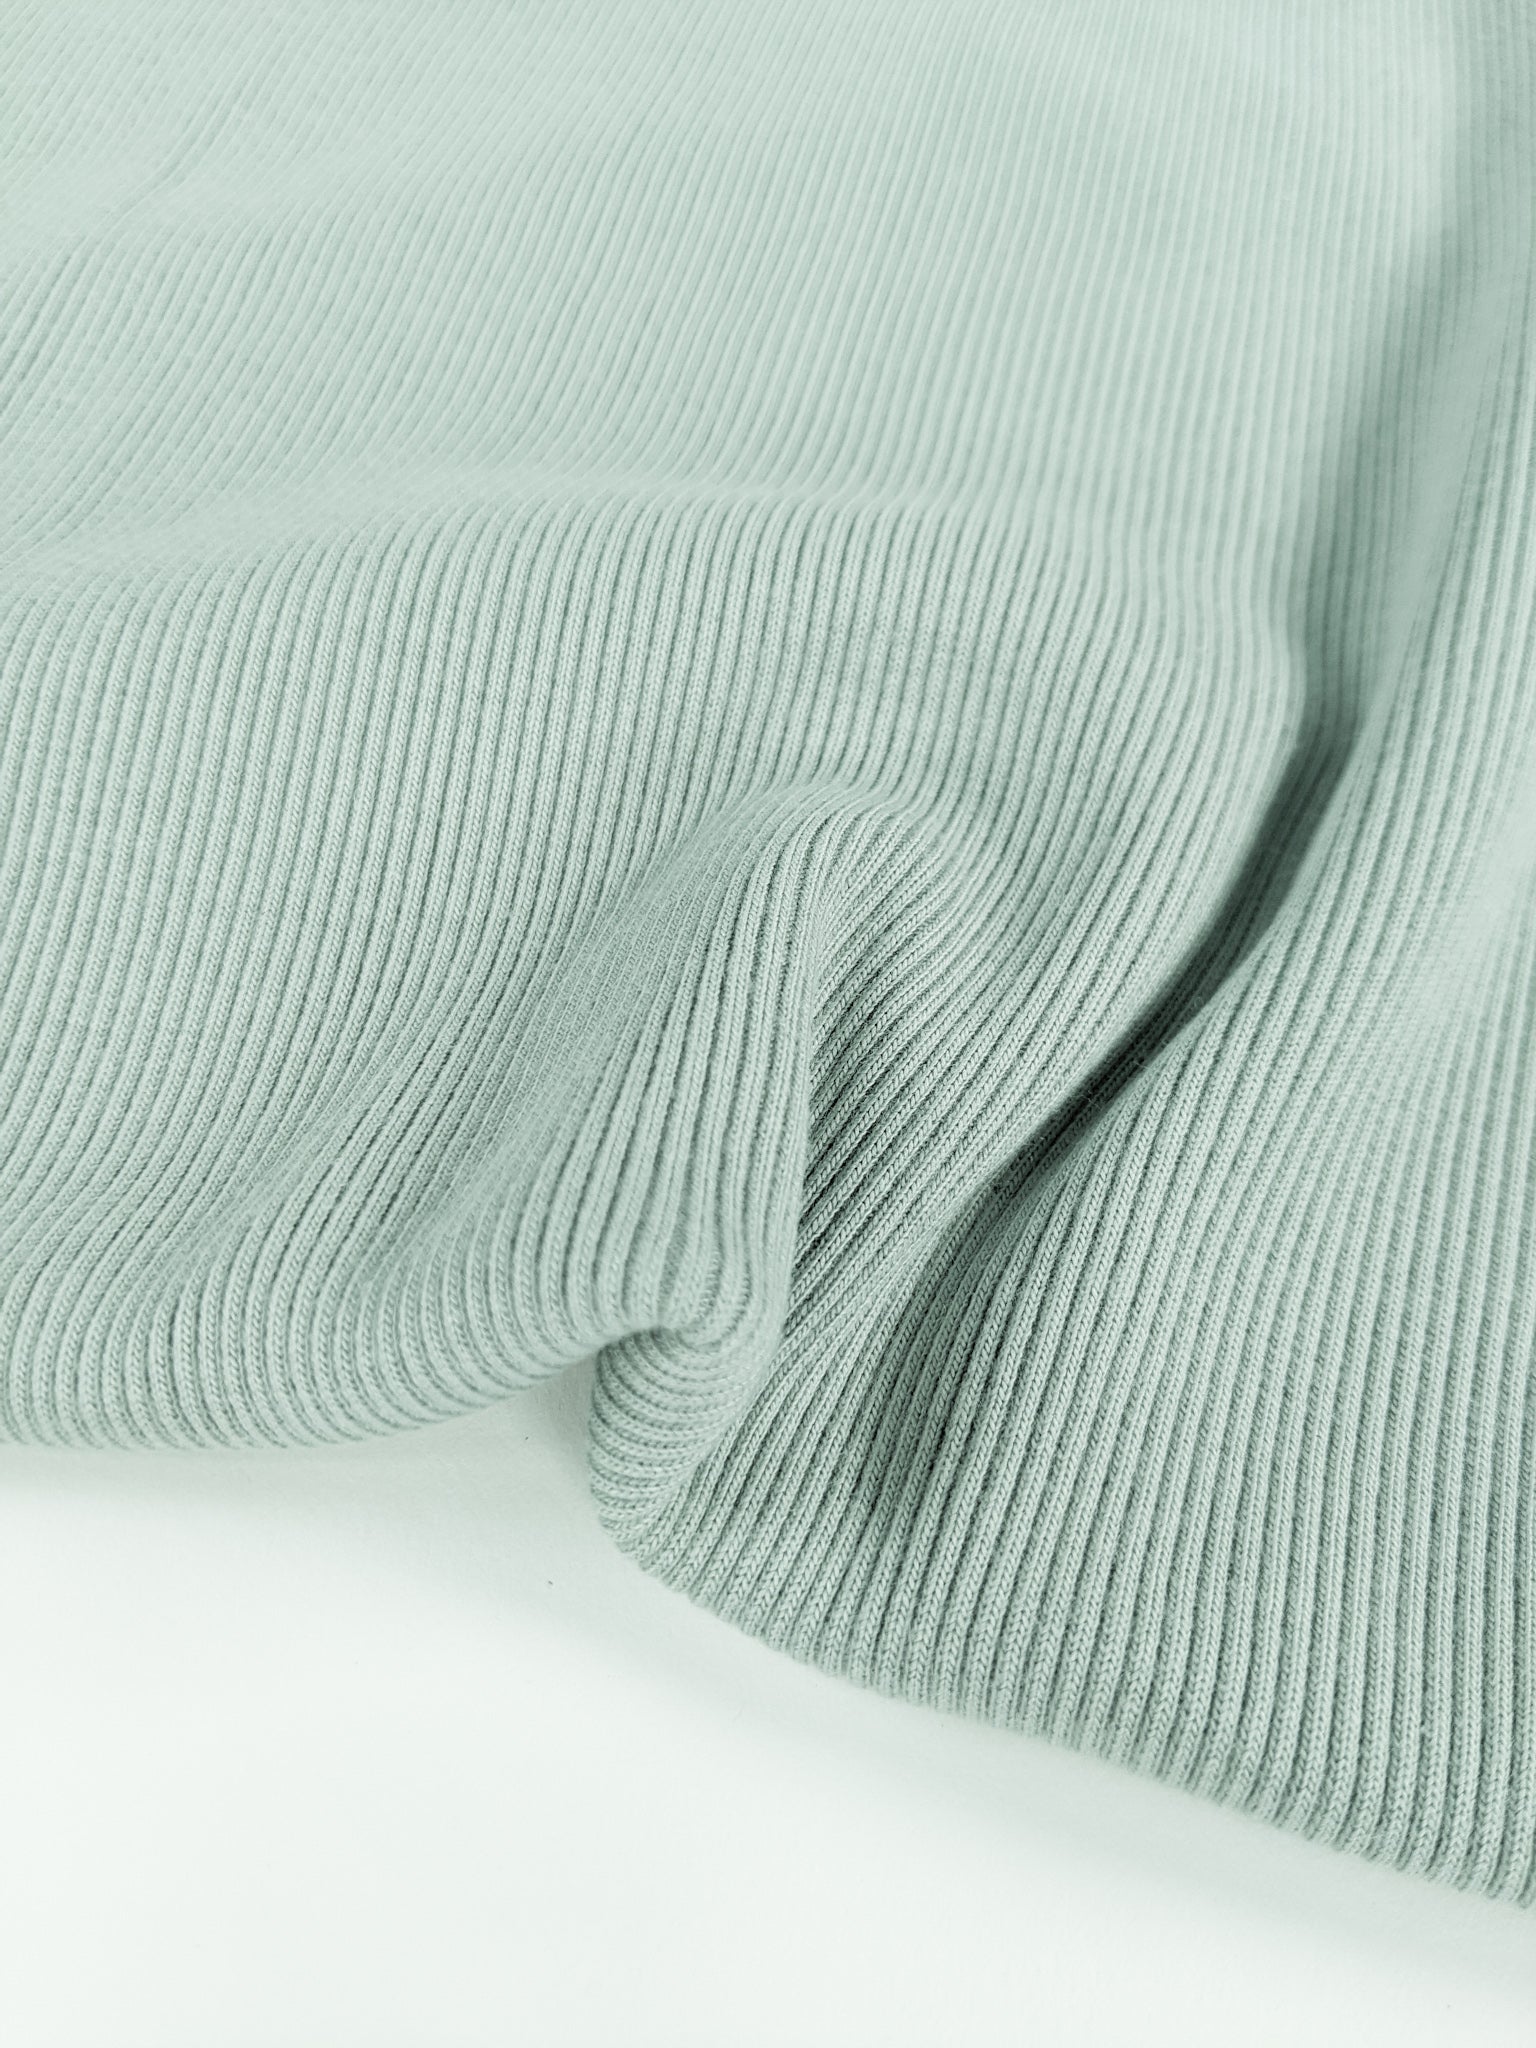 Premium Heavyweight Cotton Fleece Fabric for Hoodies, Sweatshirt,  Sweatpants, Craft, High Quality Matching Ribs 